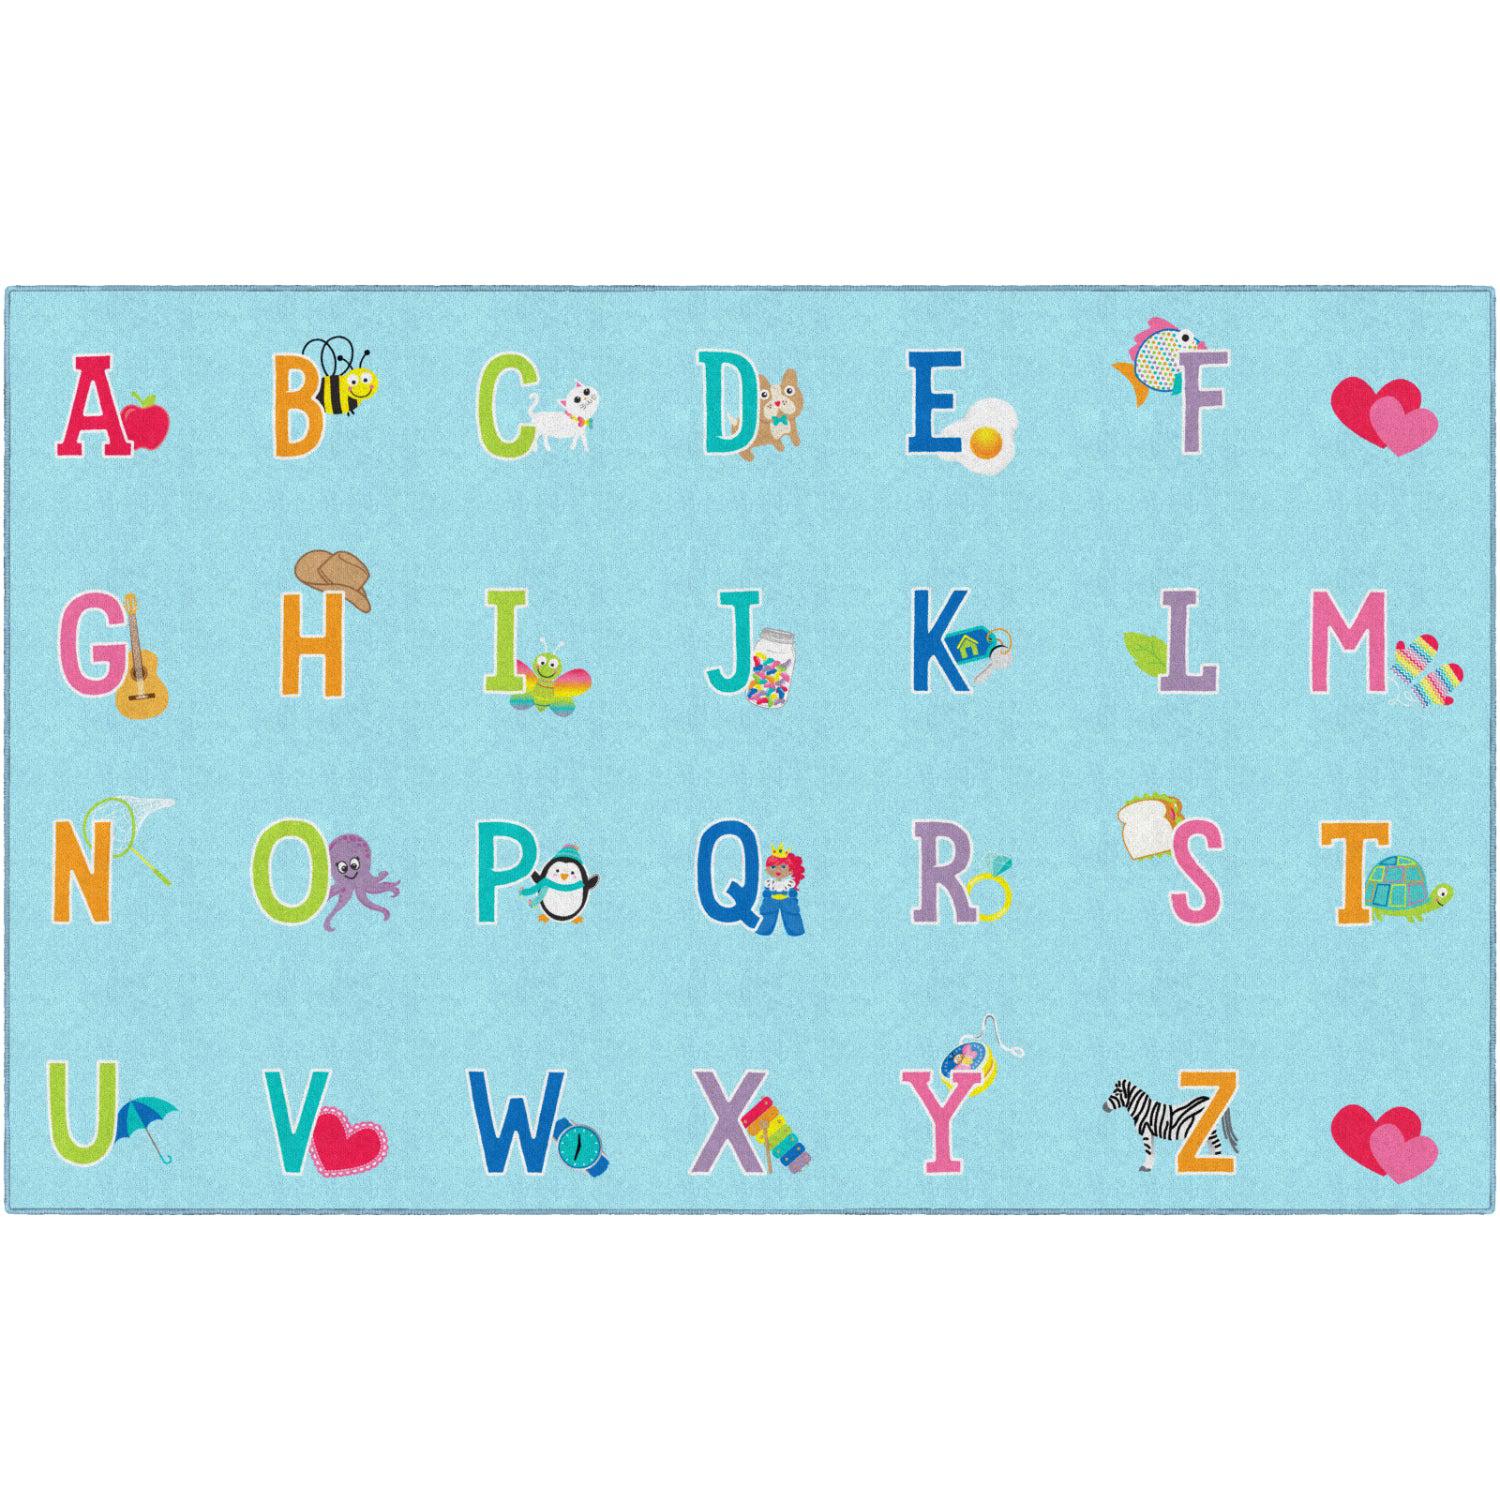 Schoolgirl Style Alphabet Picture On Blue Criss Cross Applesauce Rug, 7'6" x 12' Rectangle